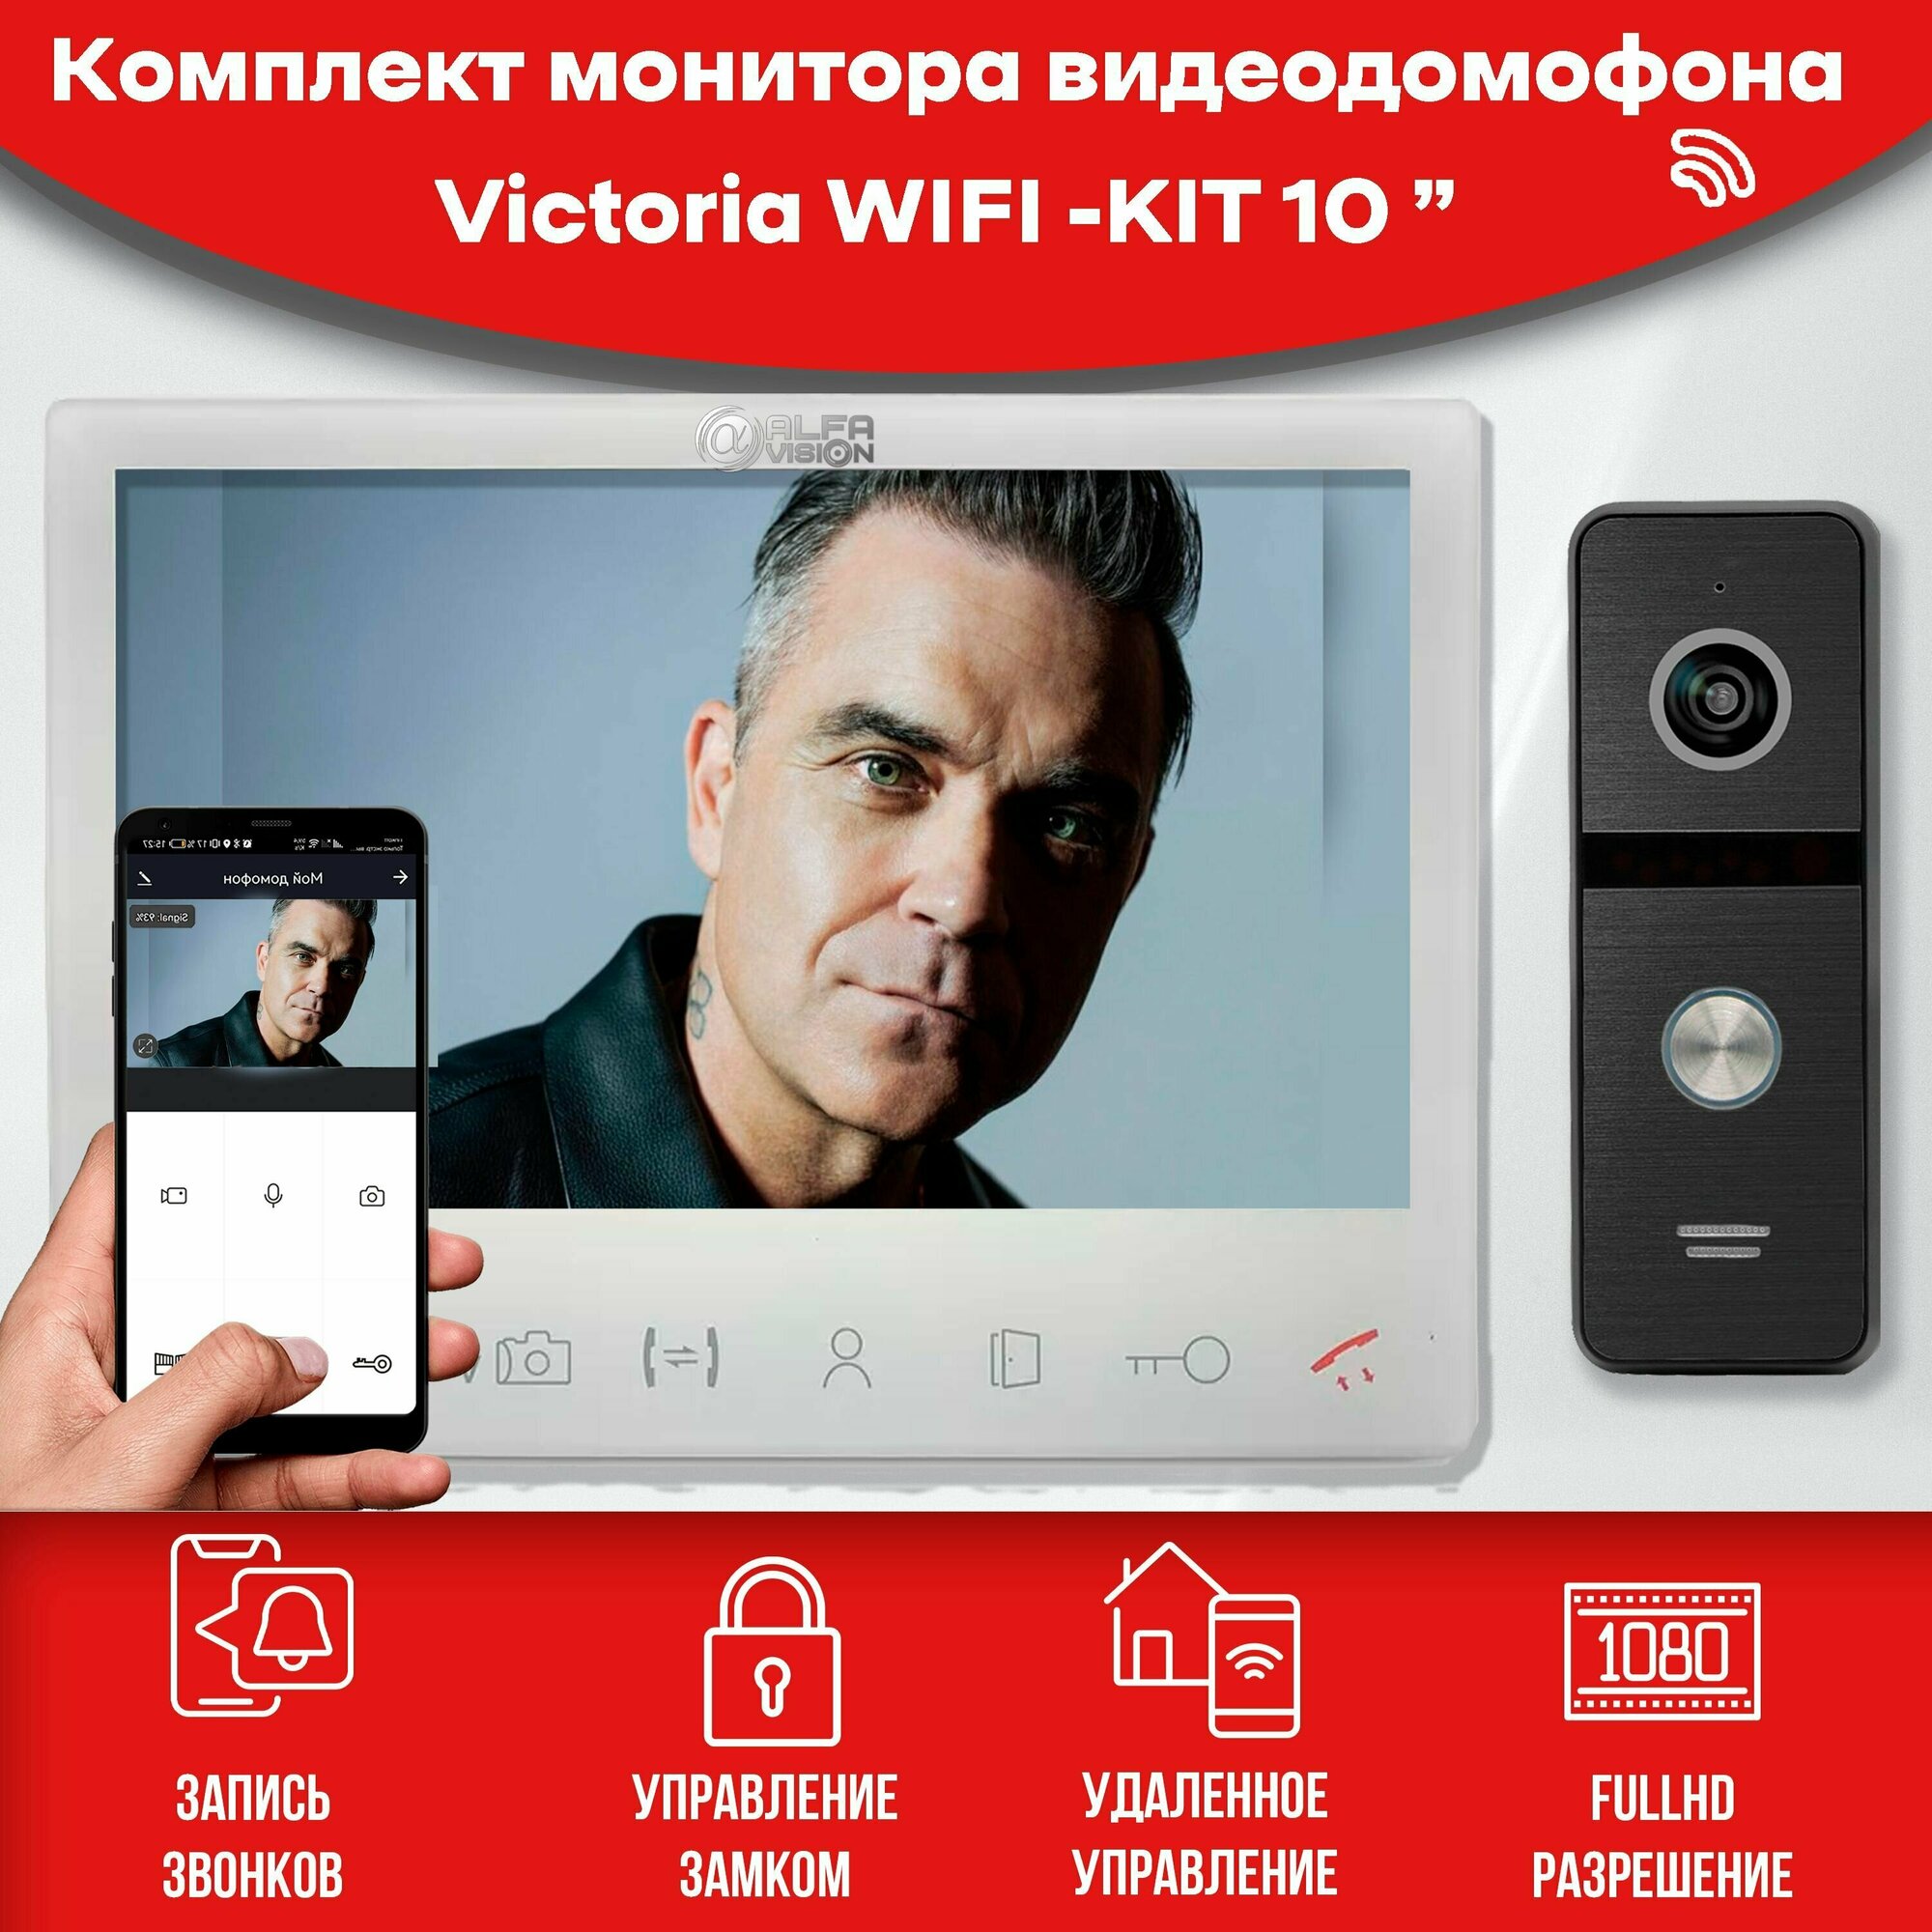 Комплект видеодомофона VICTORIA WIFI-KIT (911bl) Full HD. Экран 10". Поддержка Android и IOS. Совместим с подъездным домофоном через МС.